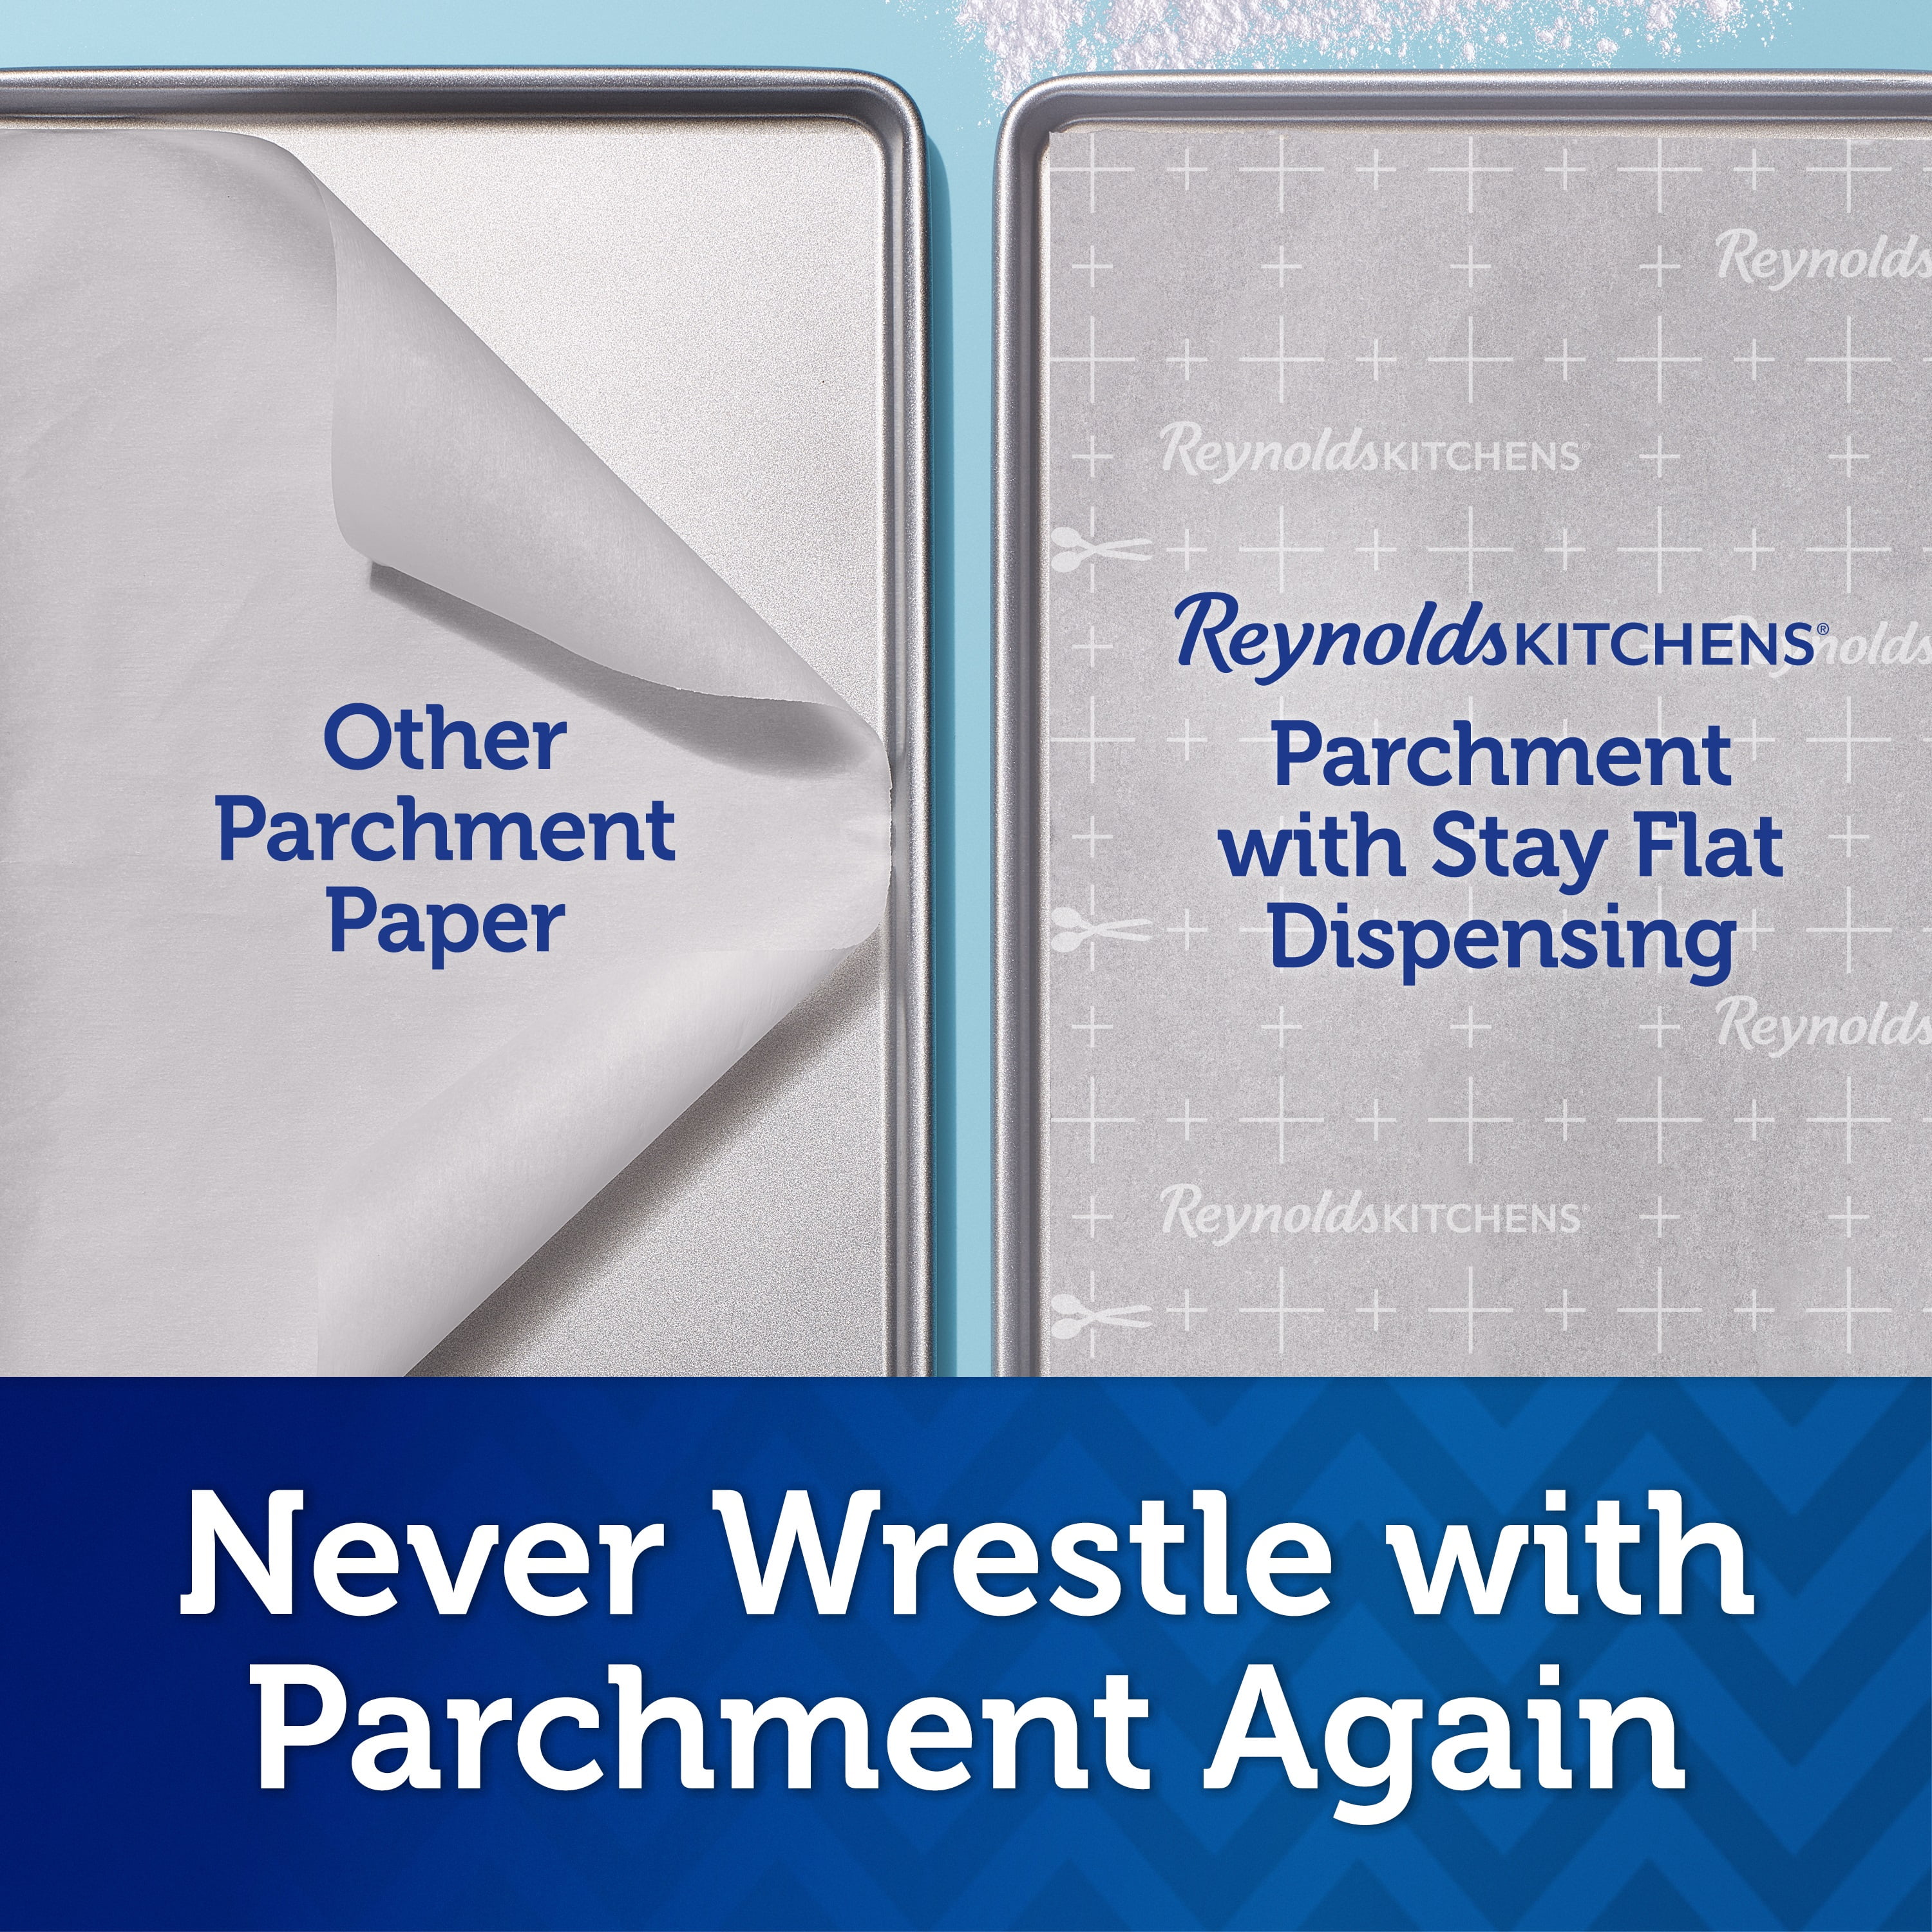 Reynolds Kitchens Non-Stick Parchment Paper - 50 sq ft, White  137289488806075591